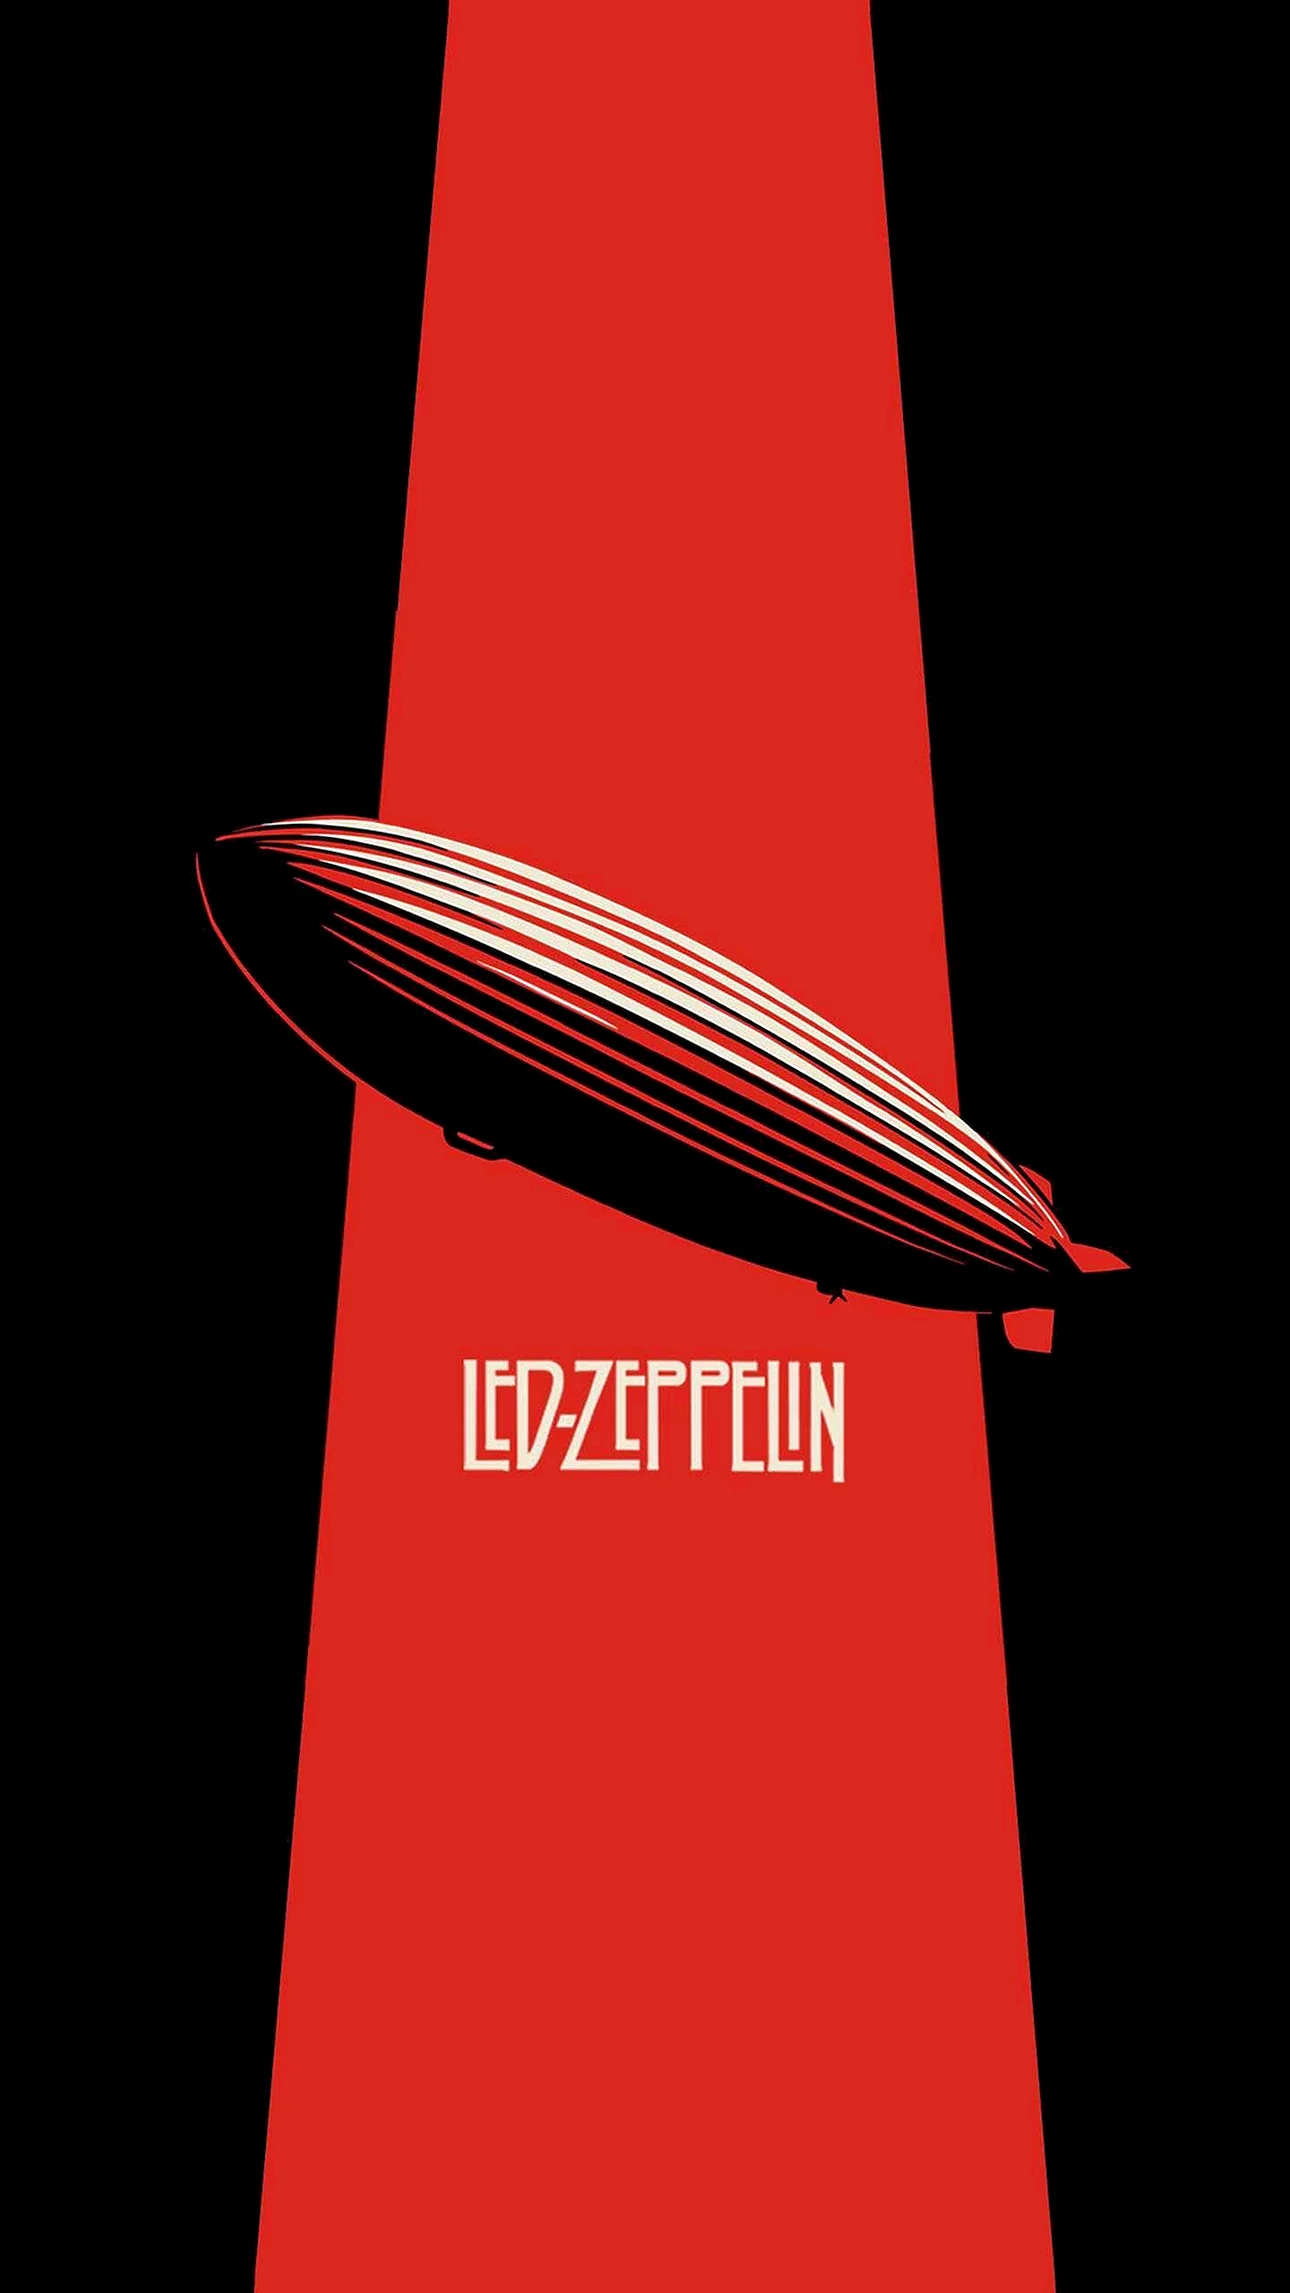 Led Zeppelin Poster Wallpaper For iPhone